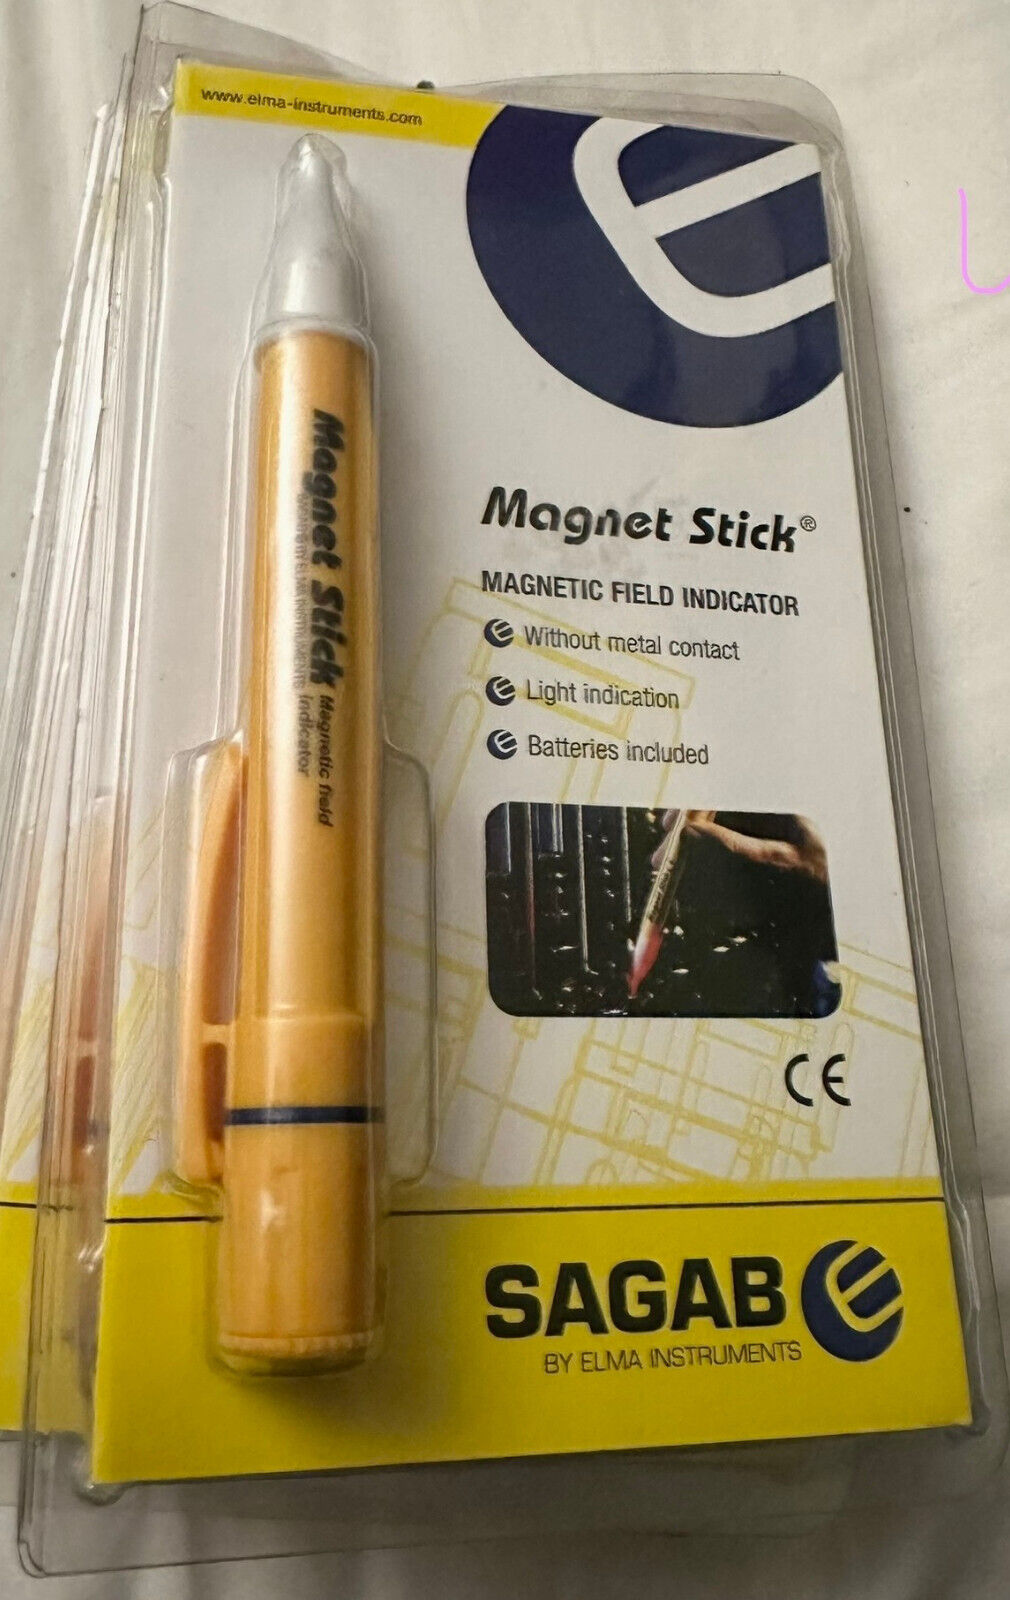 Sagab Magnet Stick Magnetic Field Indicator Probe Pen